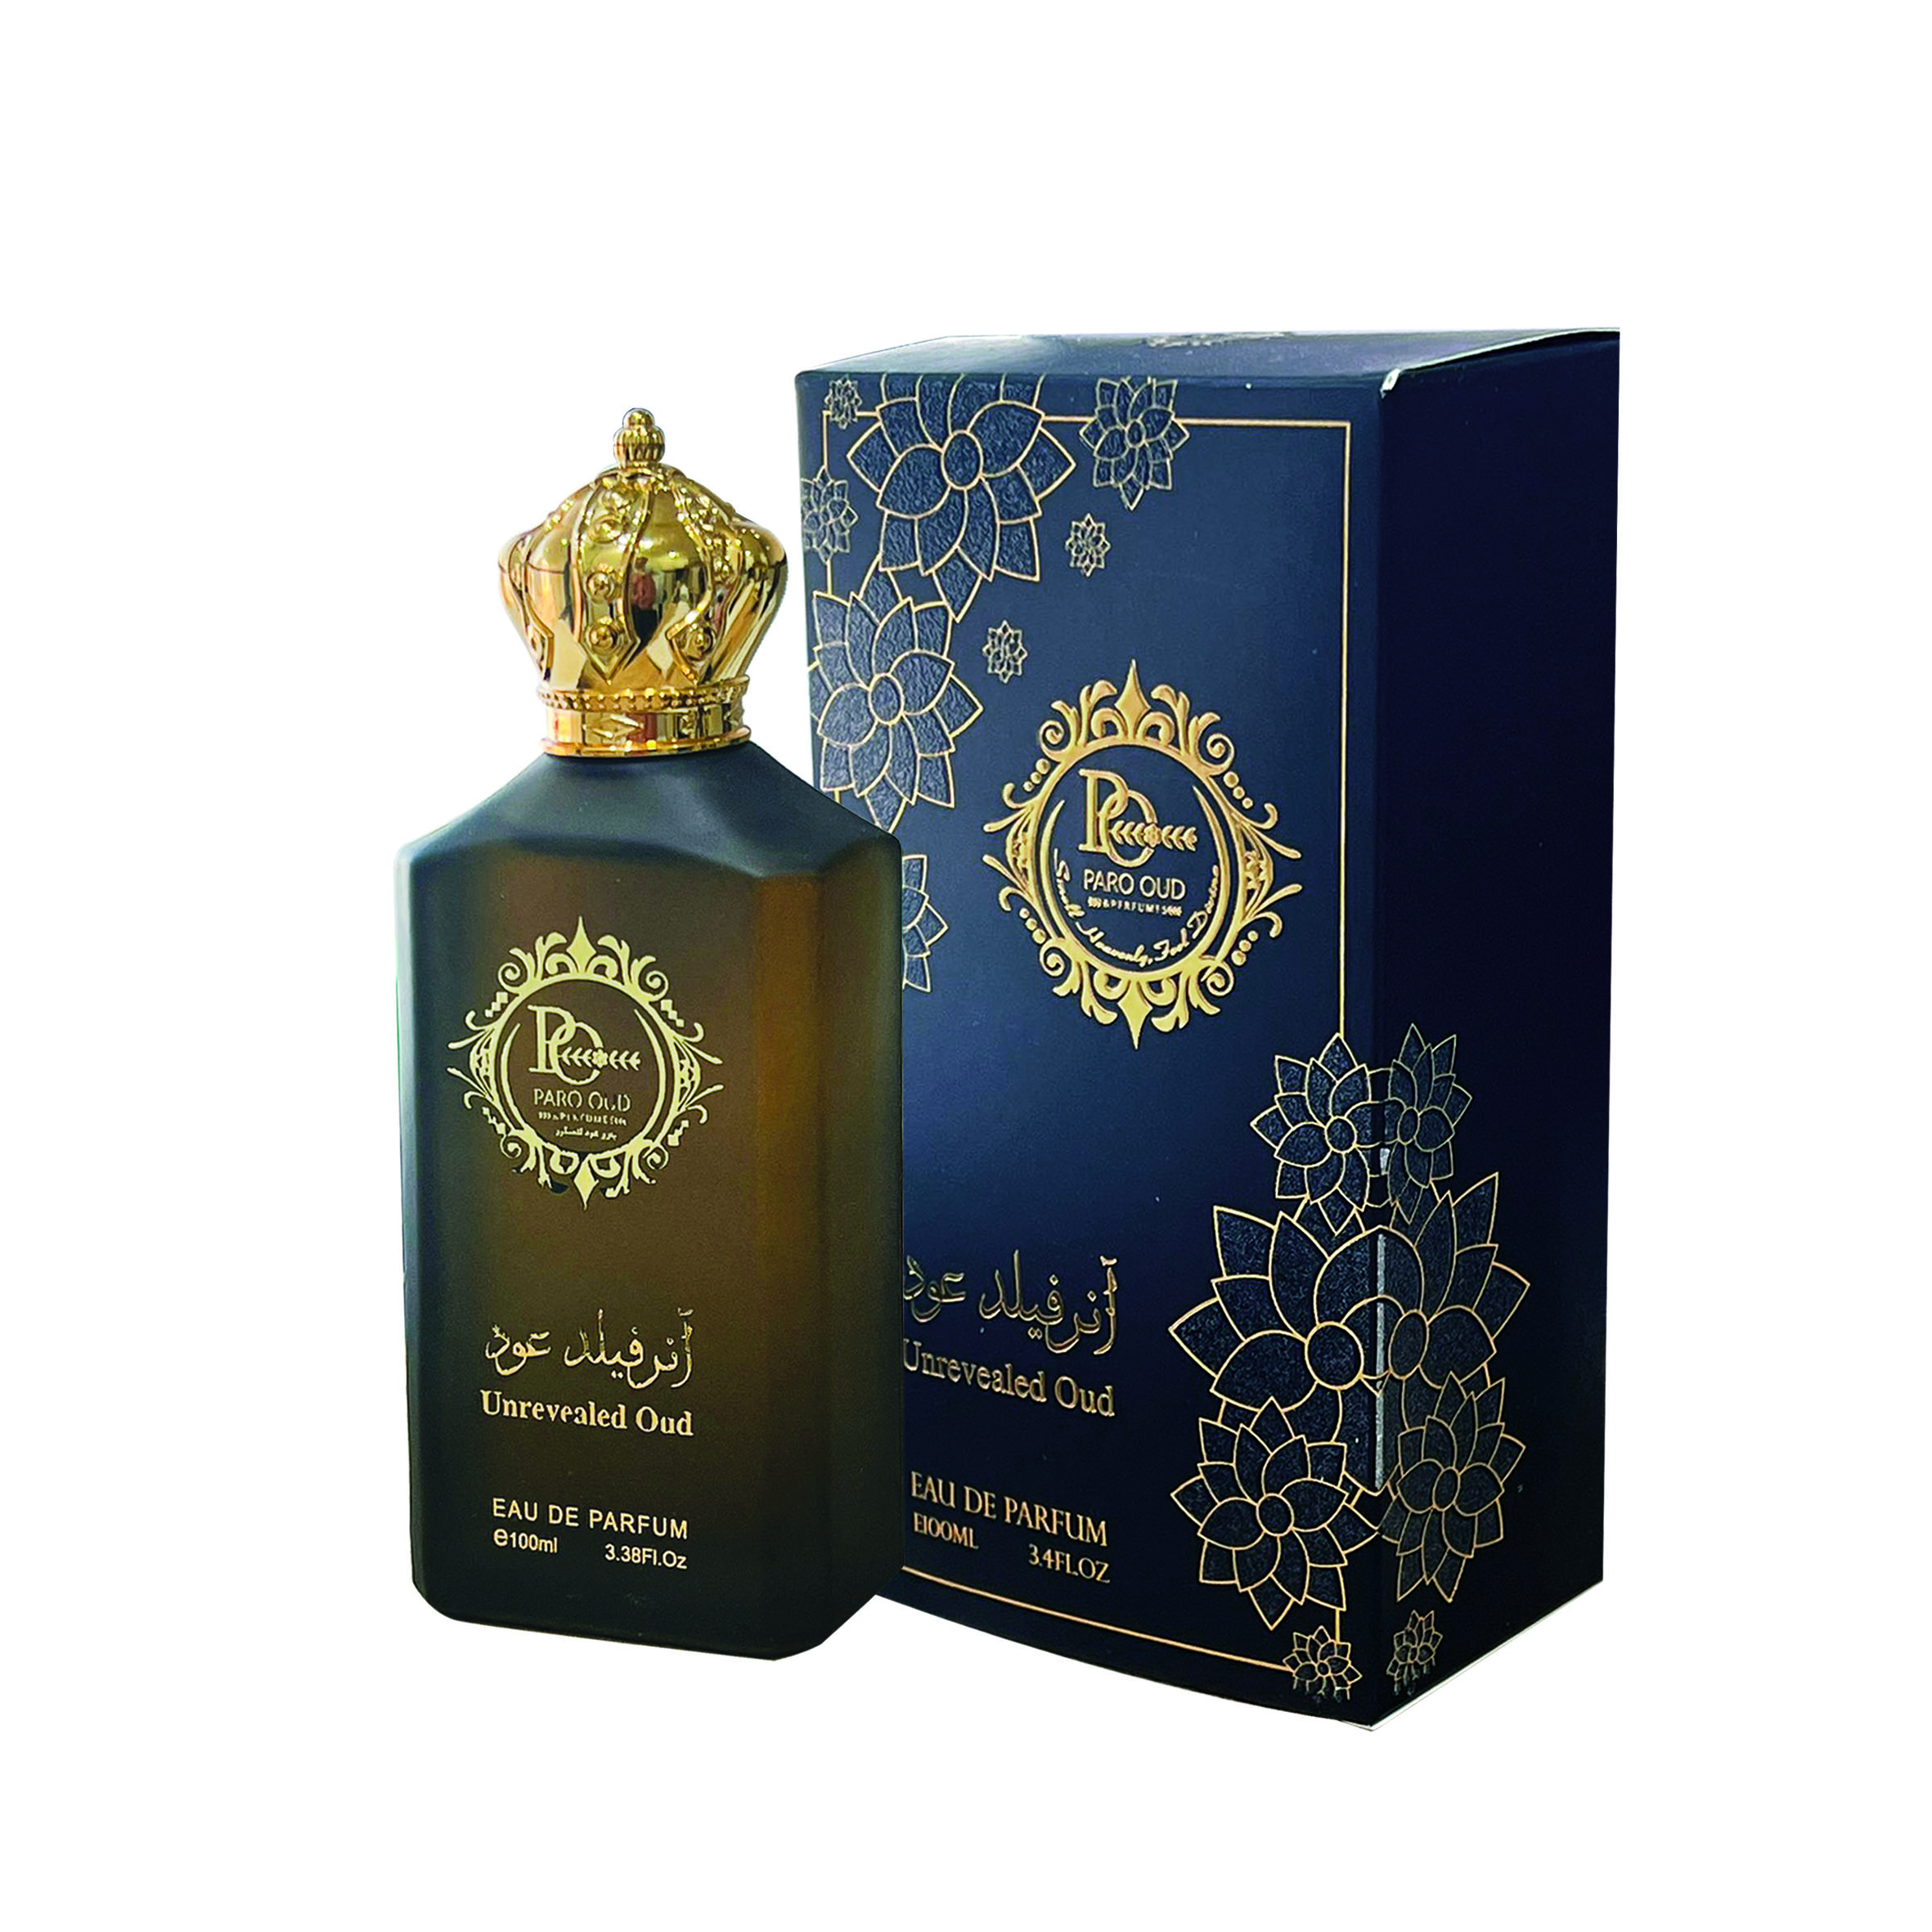 Oriental Unrevealed Oud EDP Perfume 100ml - Paro oud Perfumes